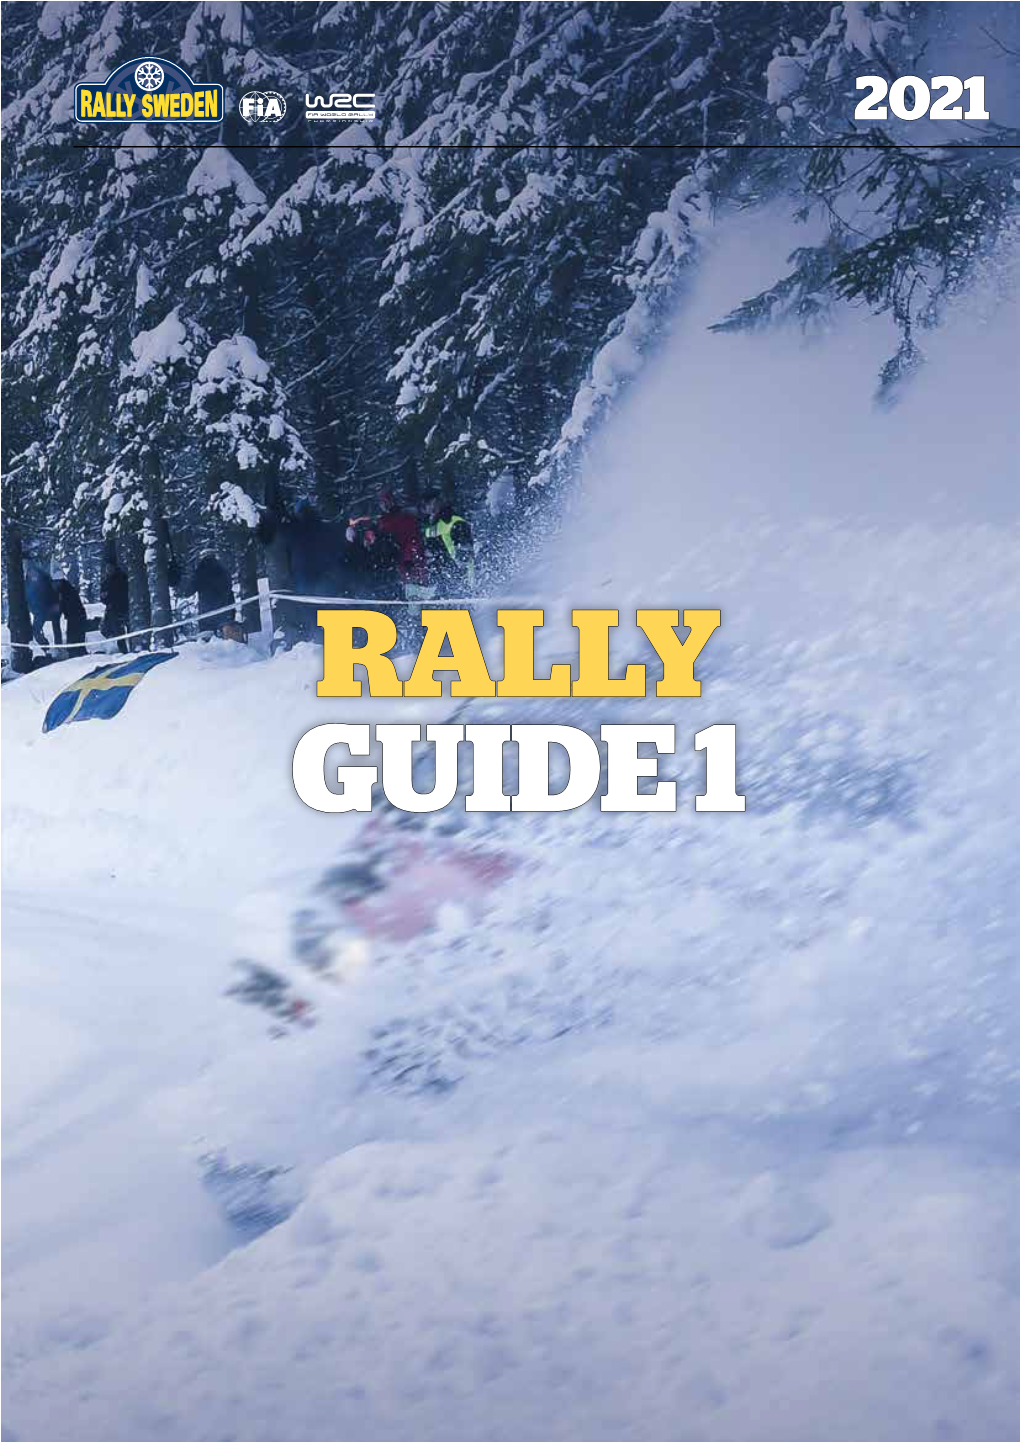 Rallyguide1 Rallysweden21.Pdf